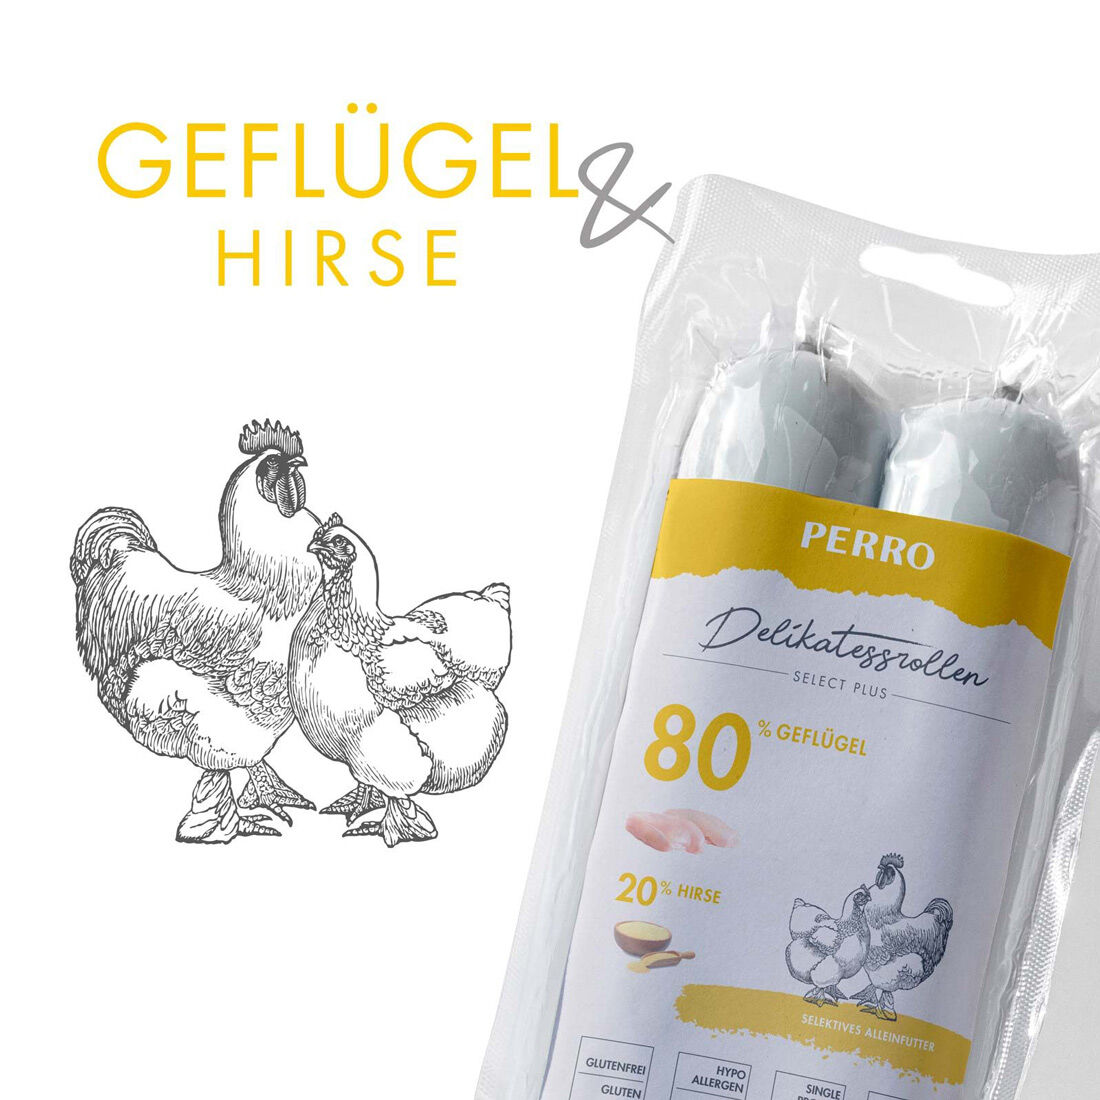 PERRO-Delikatessrolle-Gefluegel-Hirse-schnittfeste-Hundewurst-181595